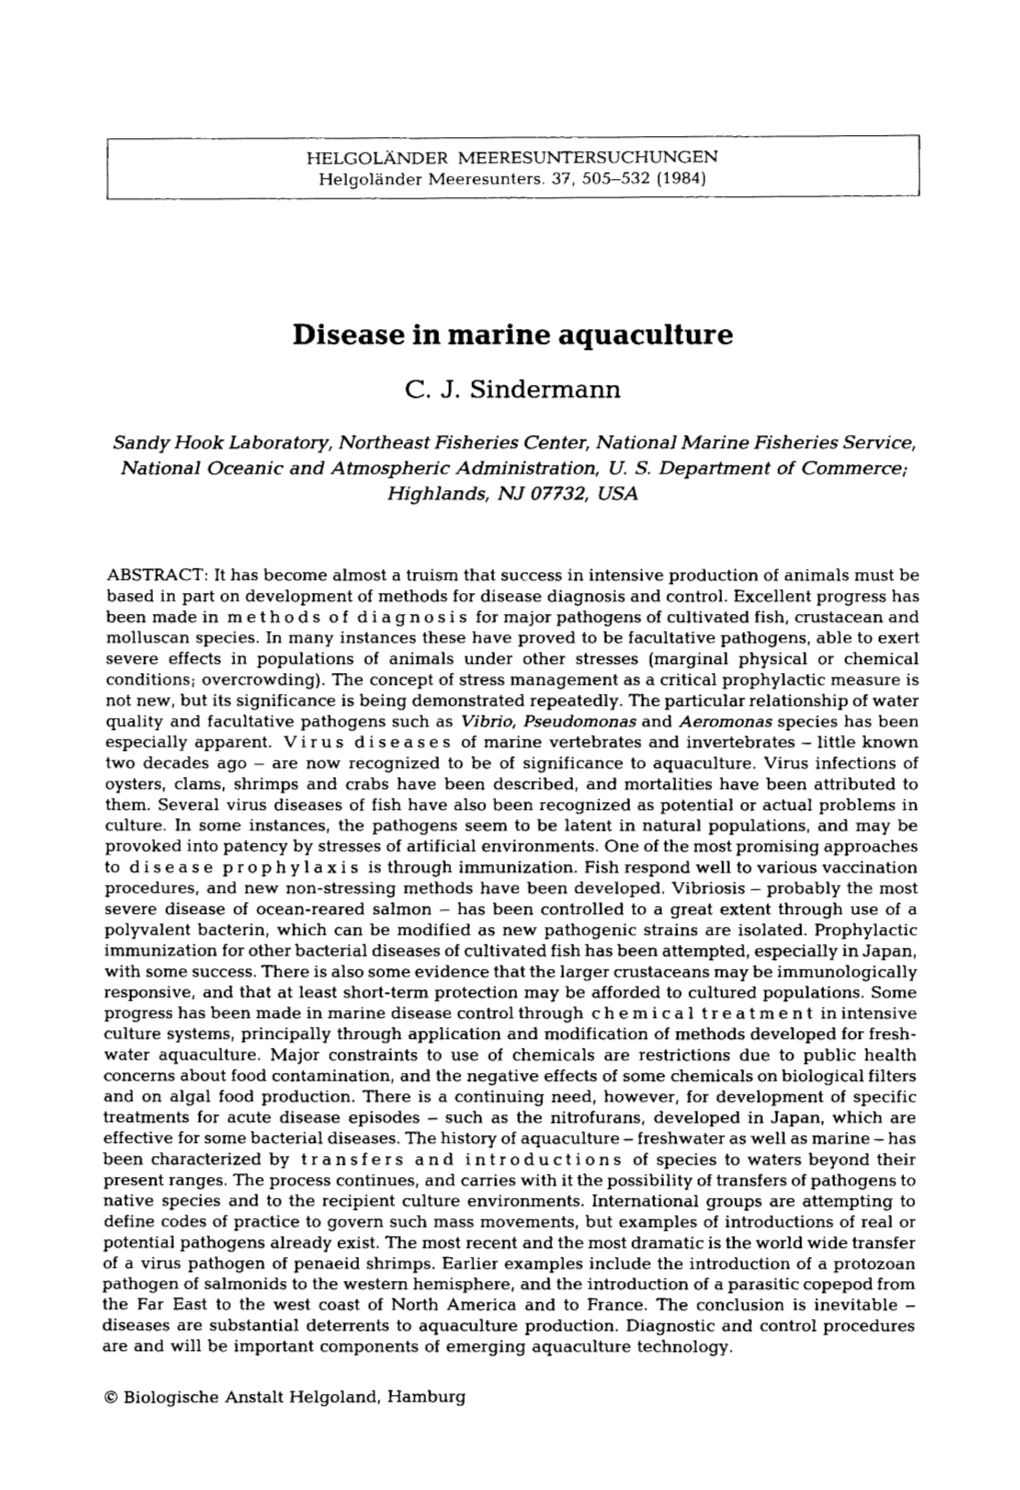 Disease in Marine Aquaculture CJ Sindermann